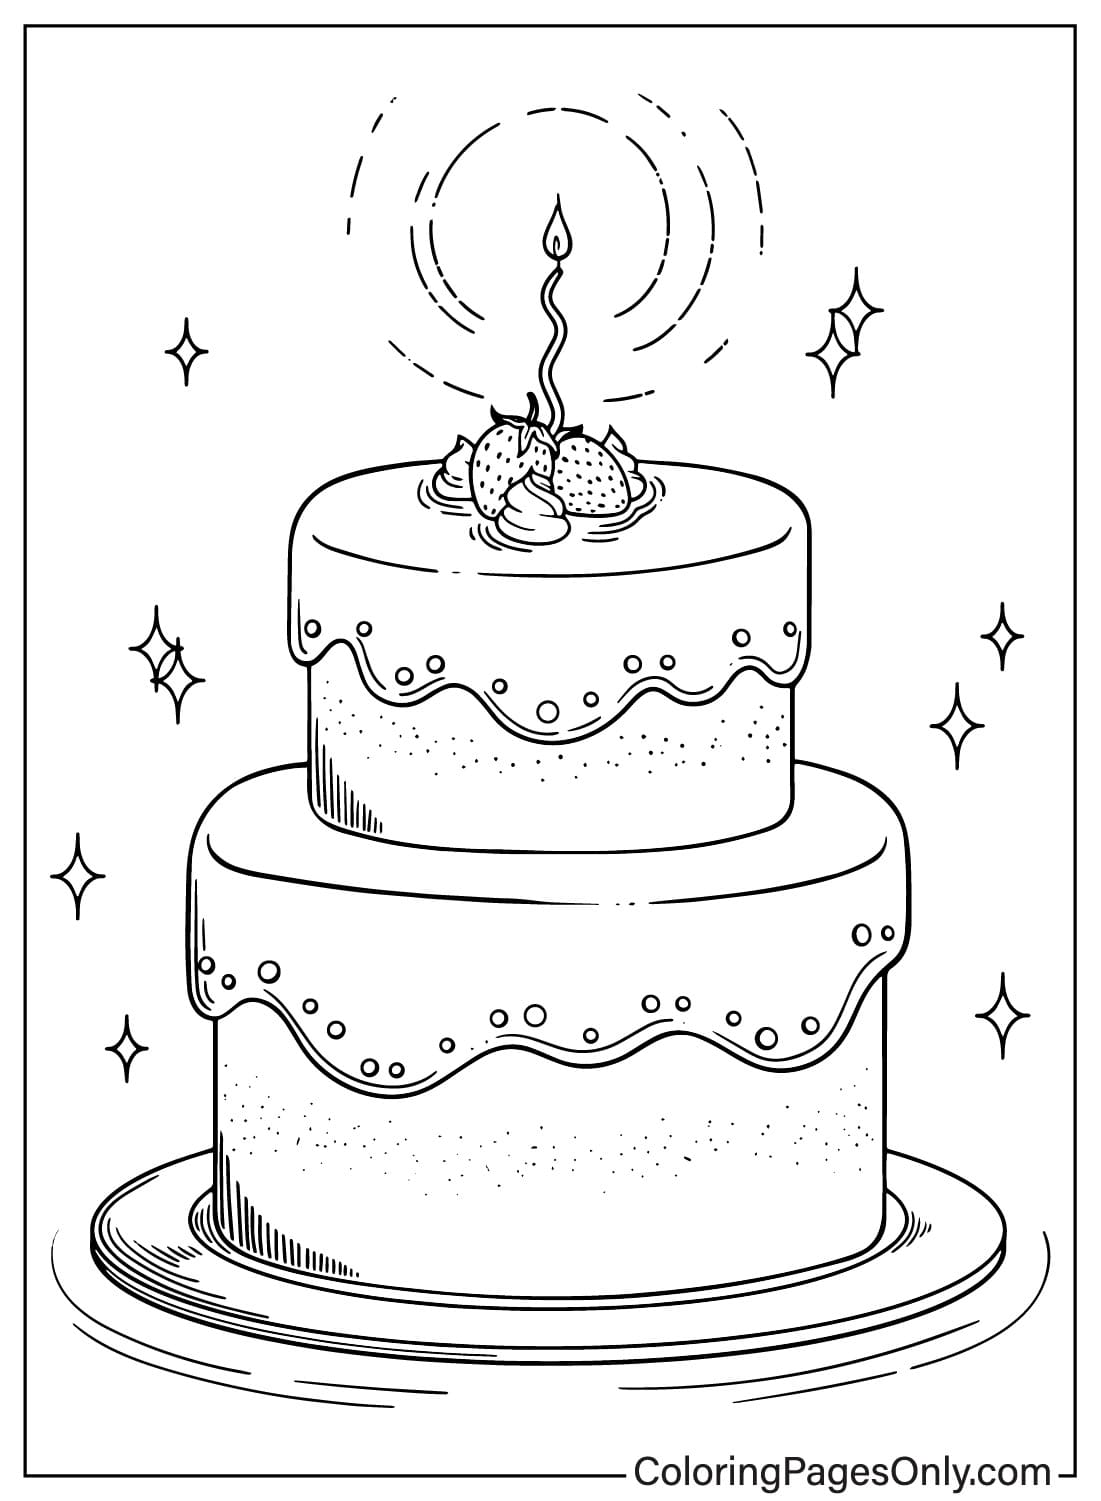 Birthday Cake Coloring Page To Printable Free Printable Coloring Pages